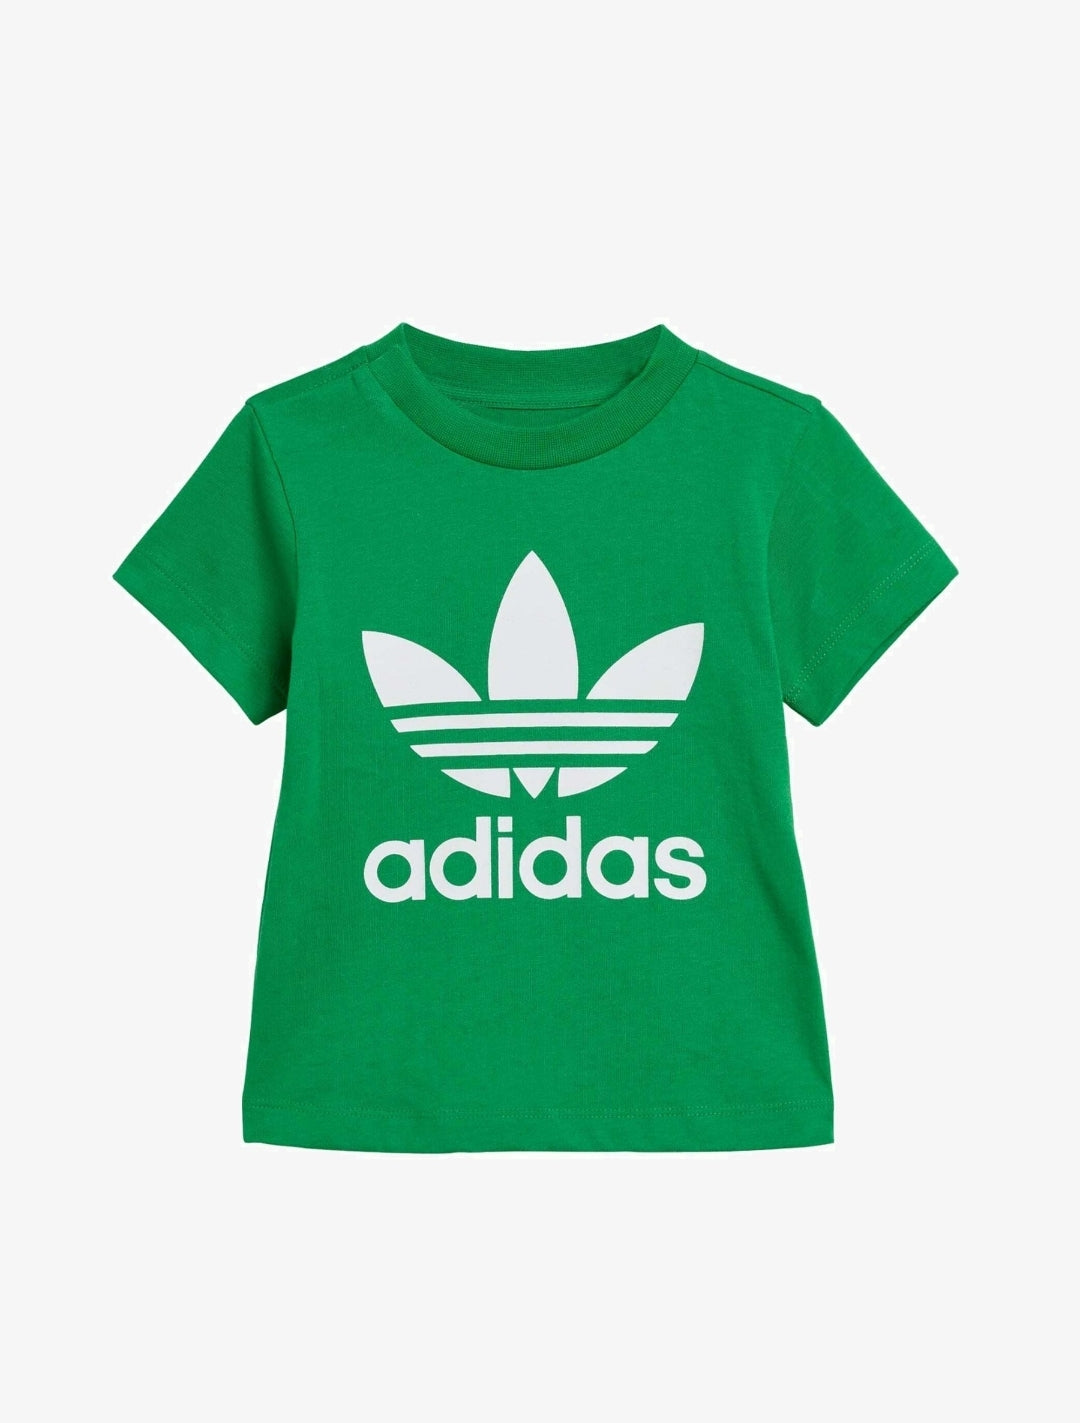 Adidas Trefoil Baby T-shirt "Lucky Green" green/white